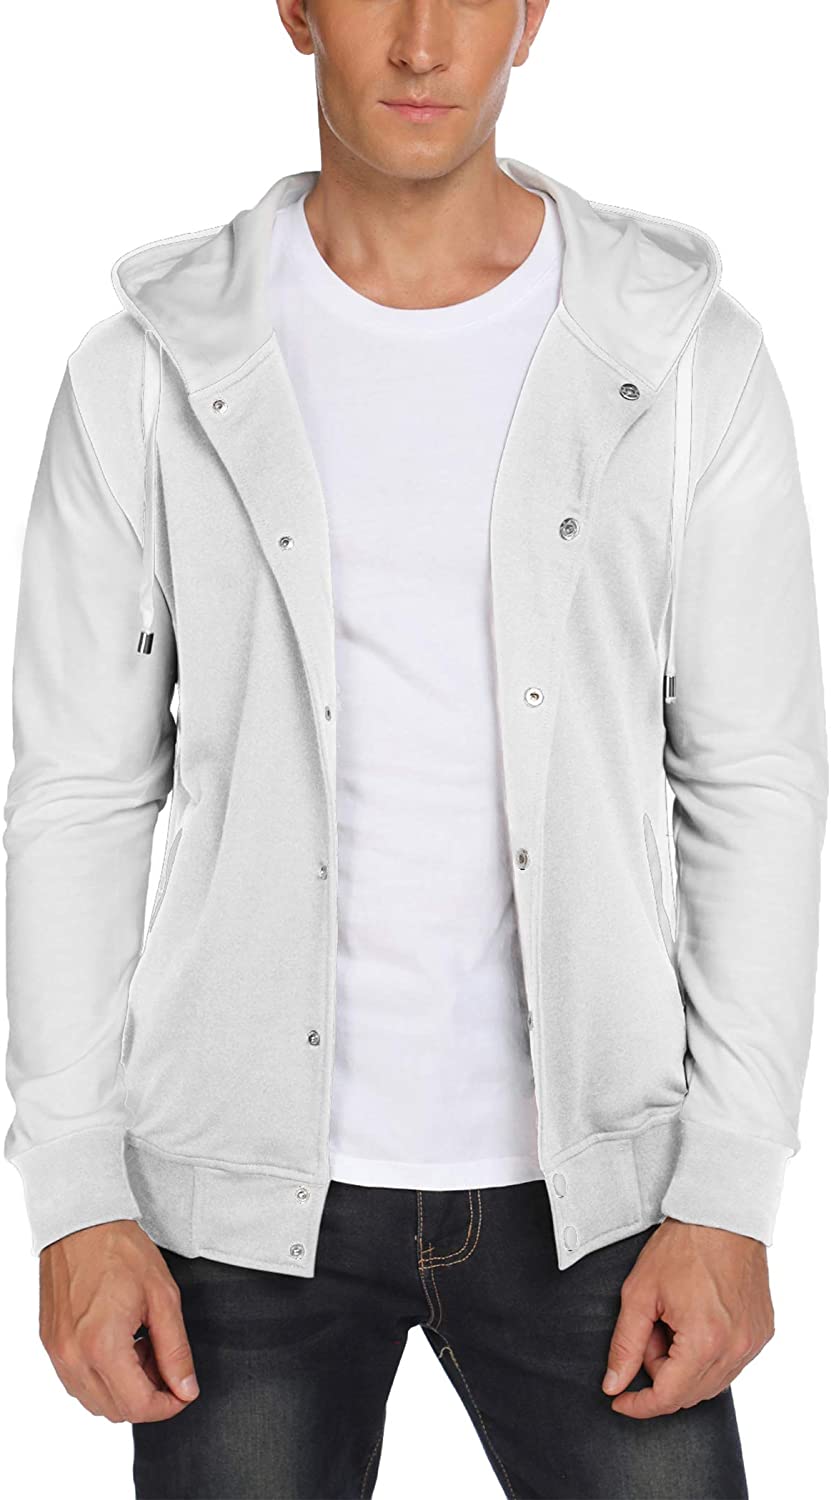 COOFANDY Mens Fashion Varsity Jacket Causal Slim Fit Cotton Bomber Jackets